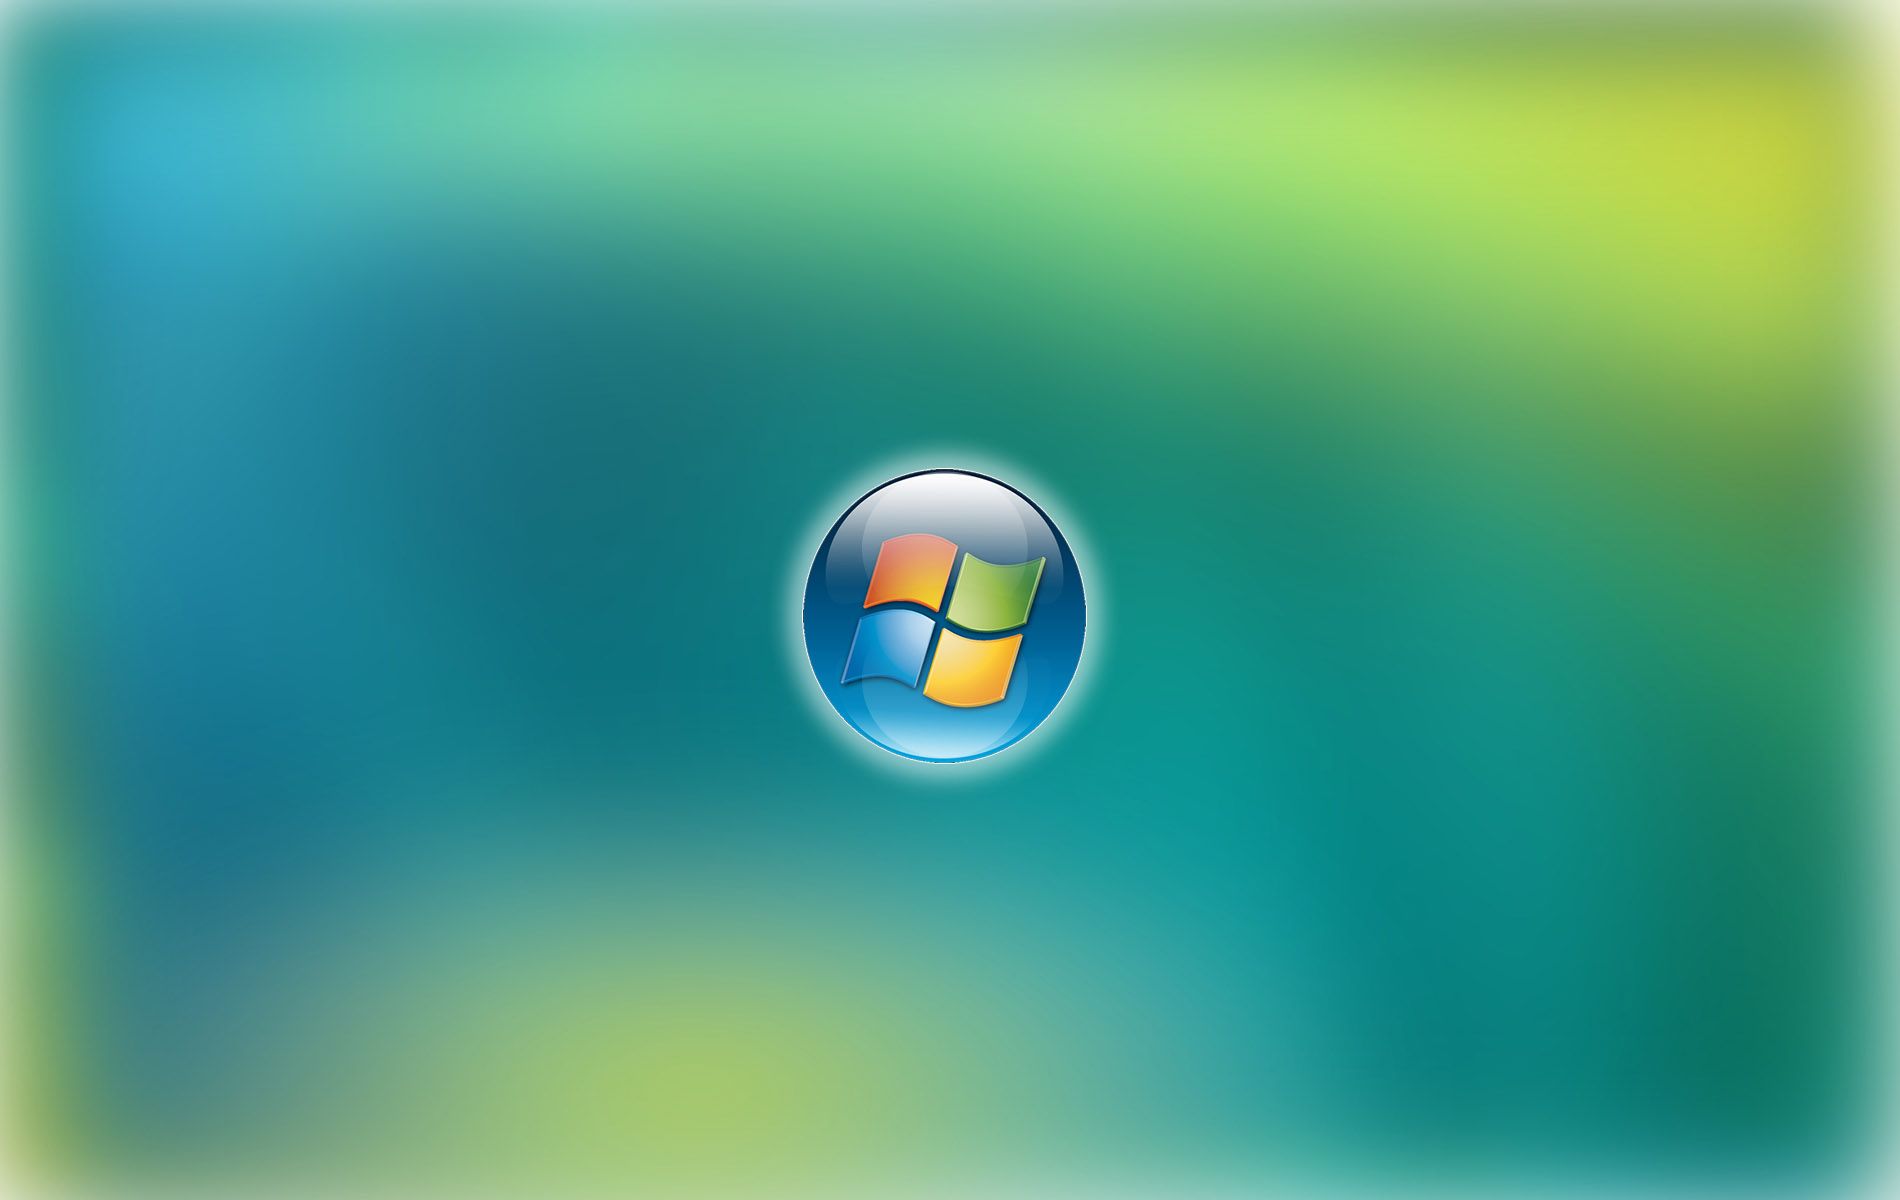 Windows Xp Logo Hd Wallpaper Free Download - fondos de pantalla hd ...